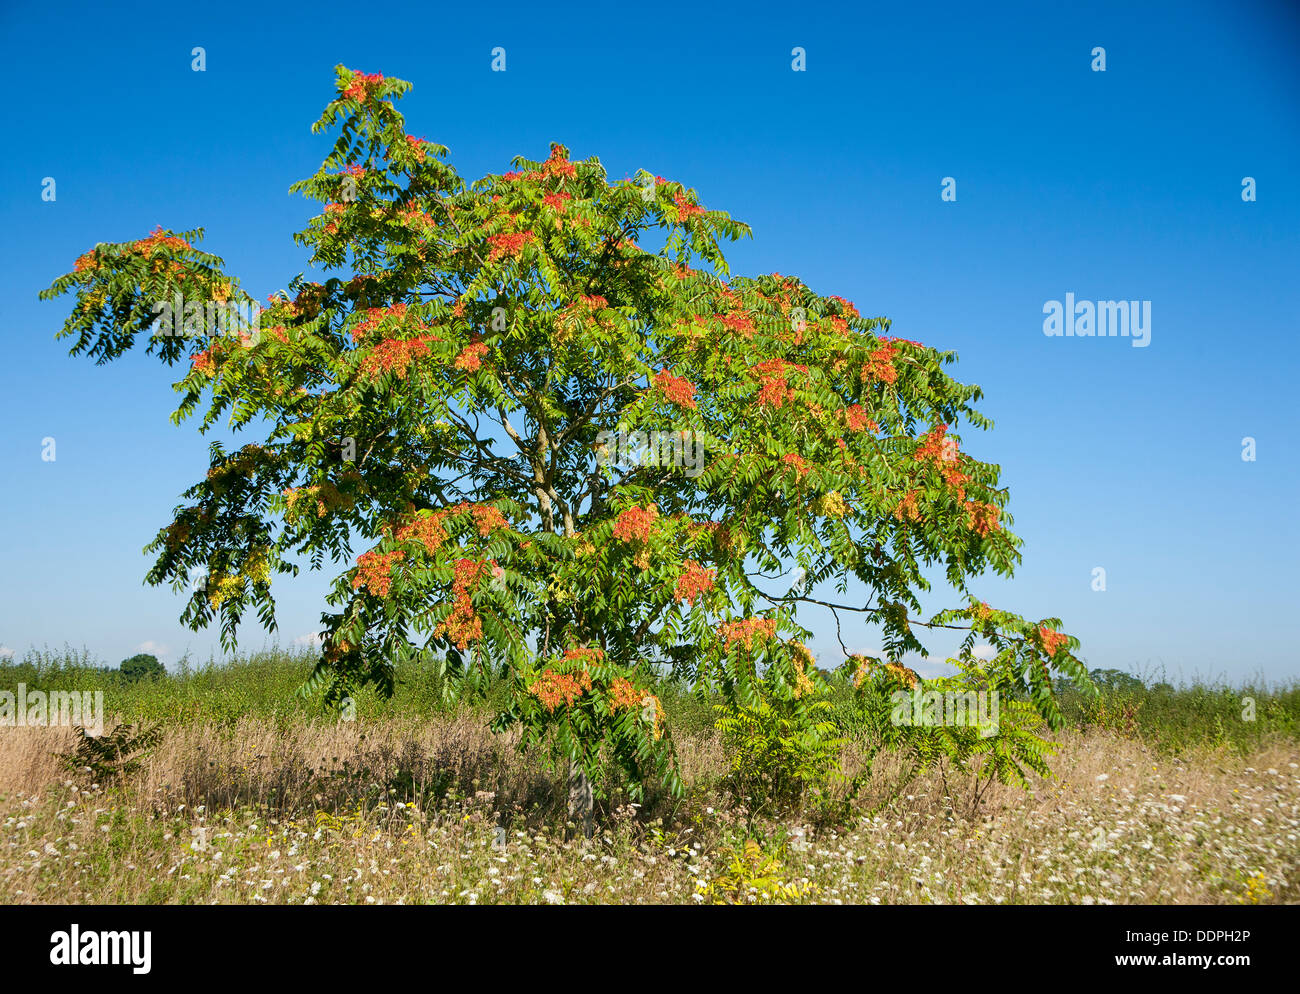 Rhus tree in field Stock Photo - Alamy